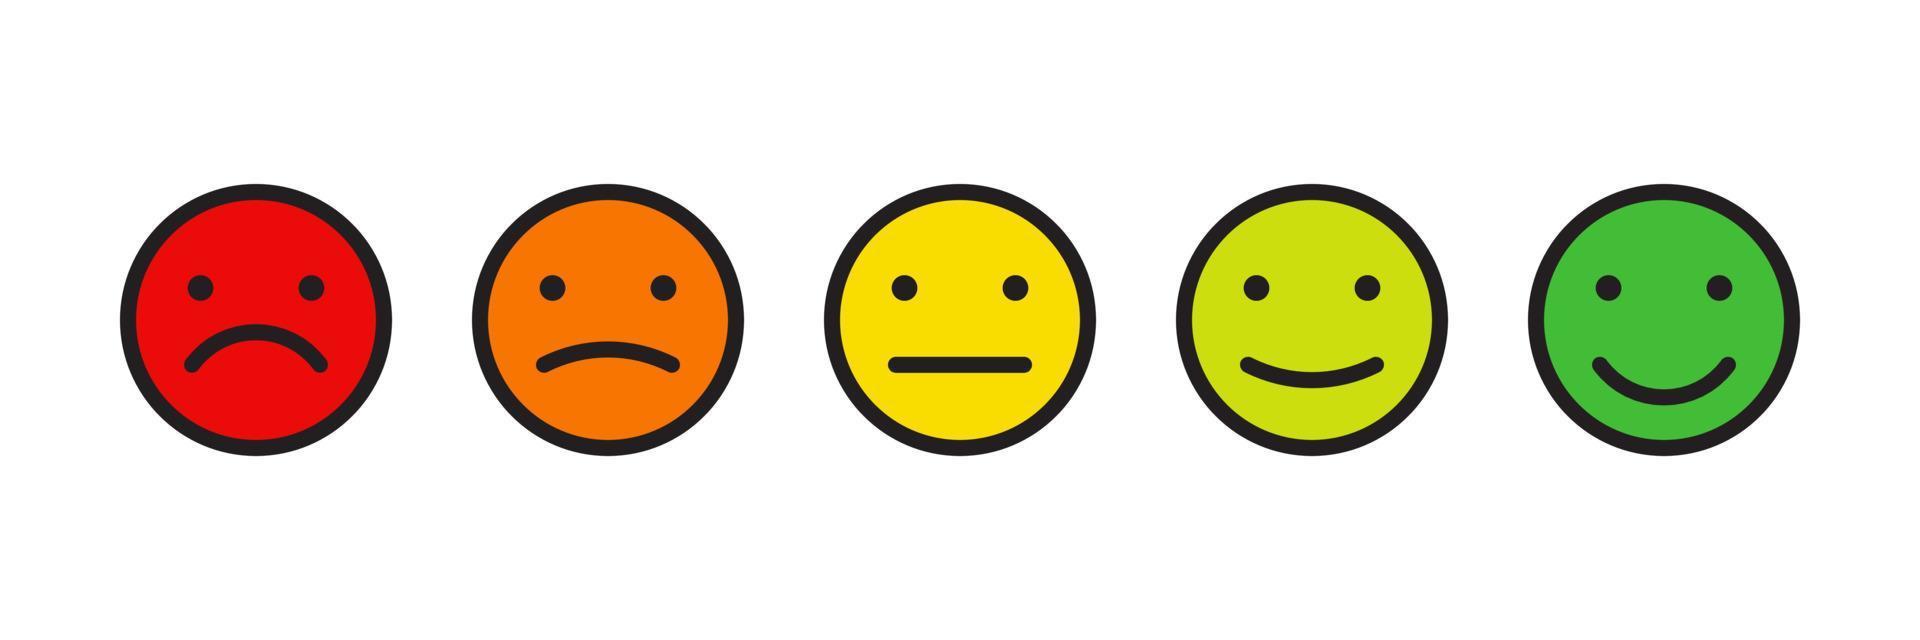 avalie sua experiência emoji faces, conceito de feedback isolado no fundo branco. vetor